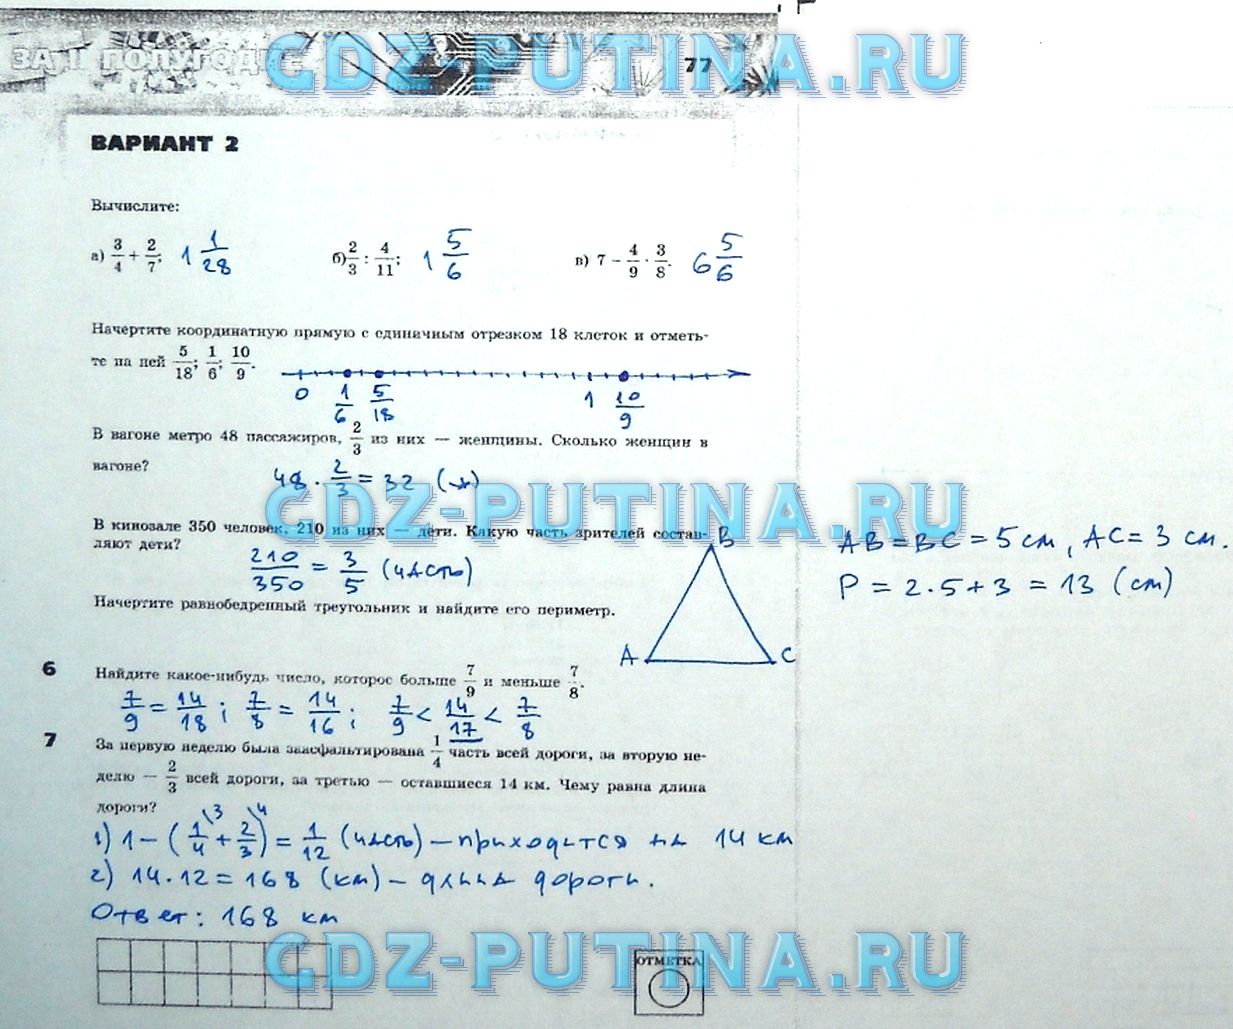 гдз 5 класс тетрадь-экзаменатор страница 77 математика Сафонова